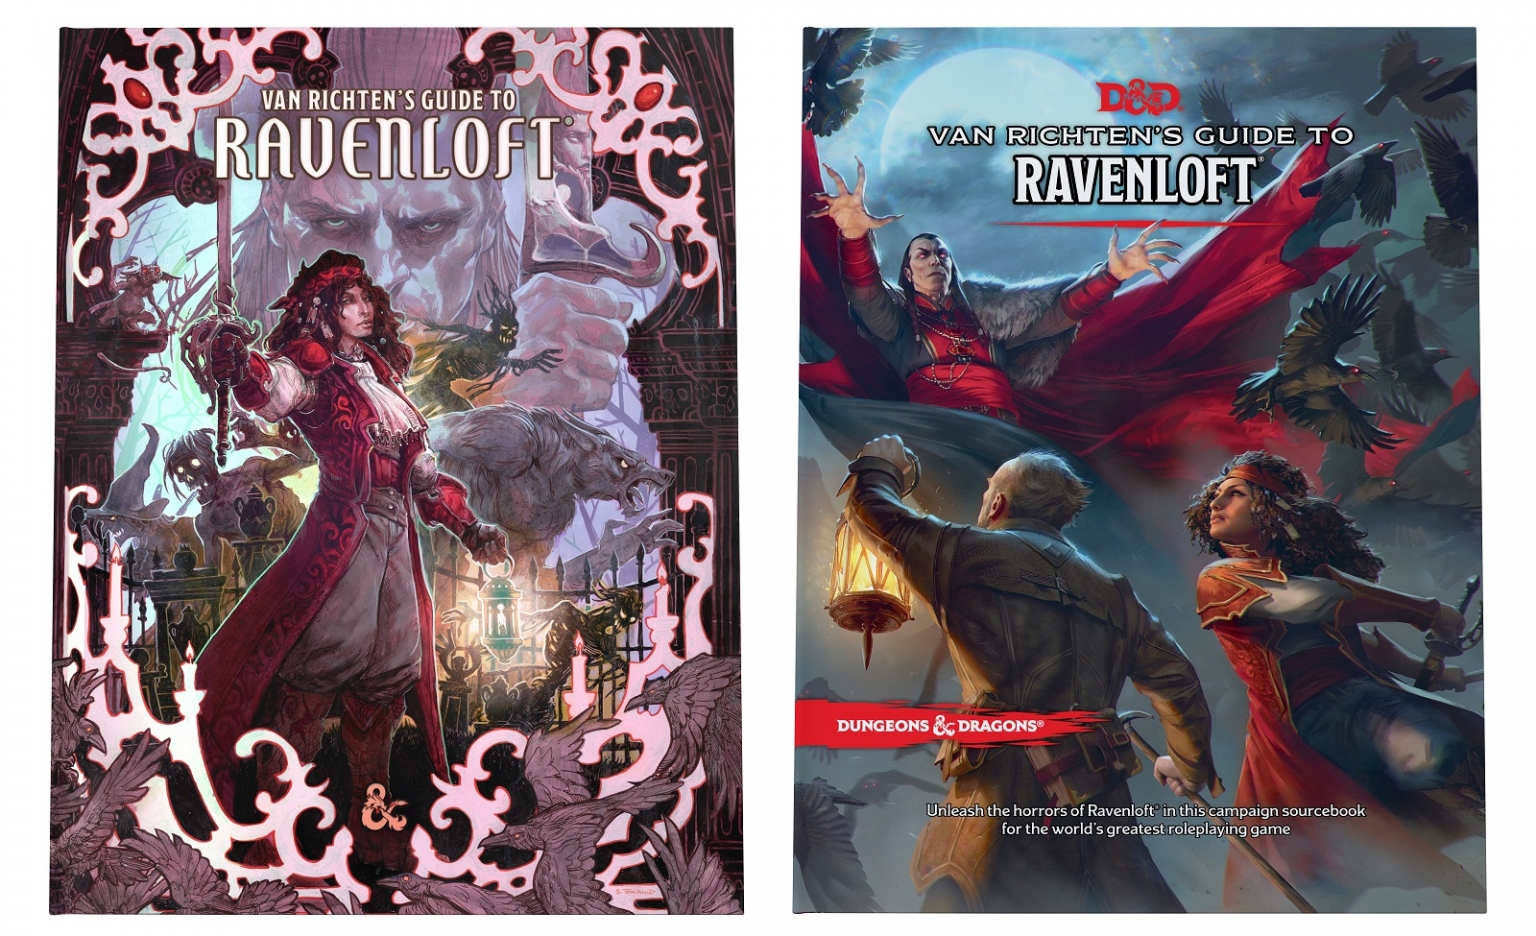 Van Richten’s Guide to Ravenloft brings multi-genre horror to D&D 5E